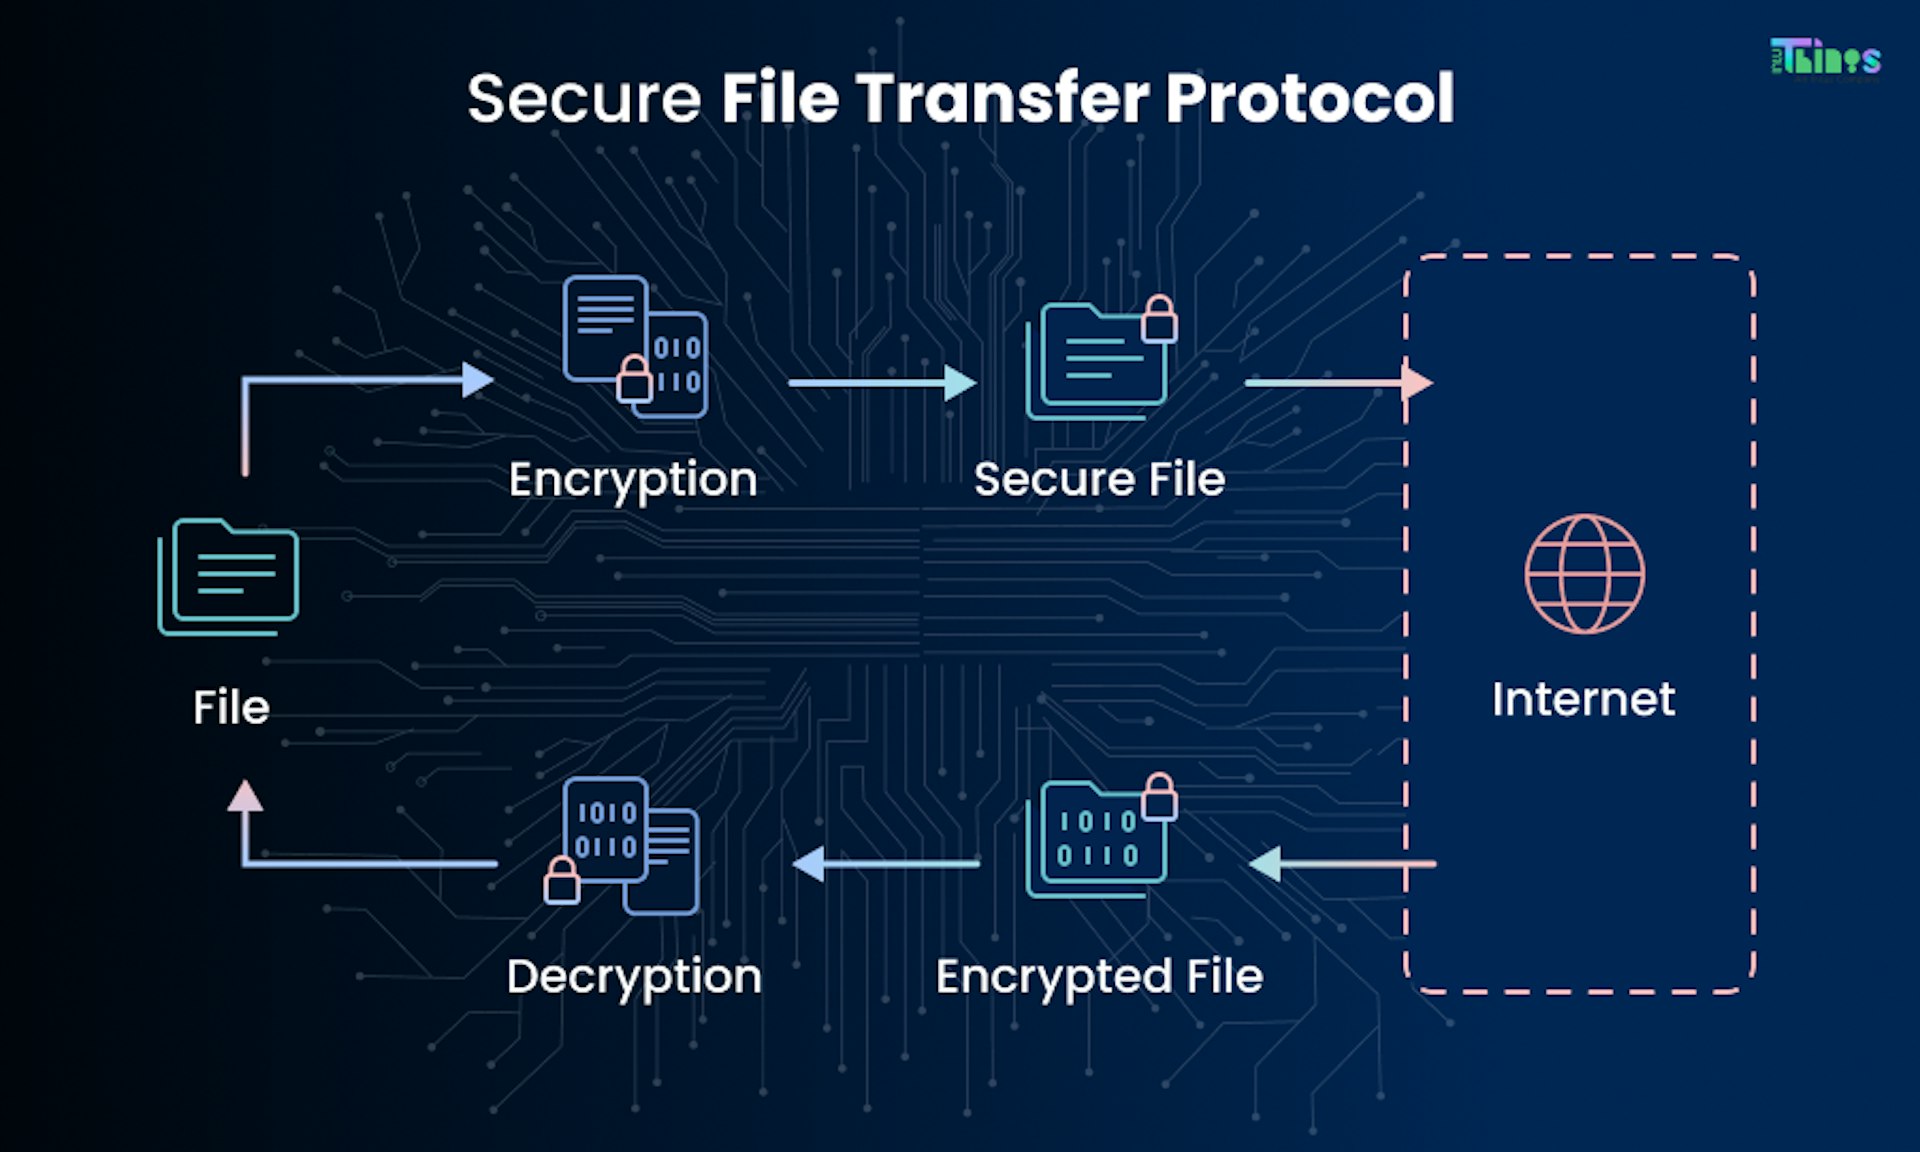 Secure File Transfer Protocol (SFTP)